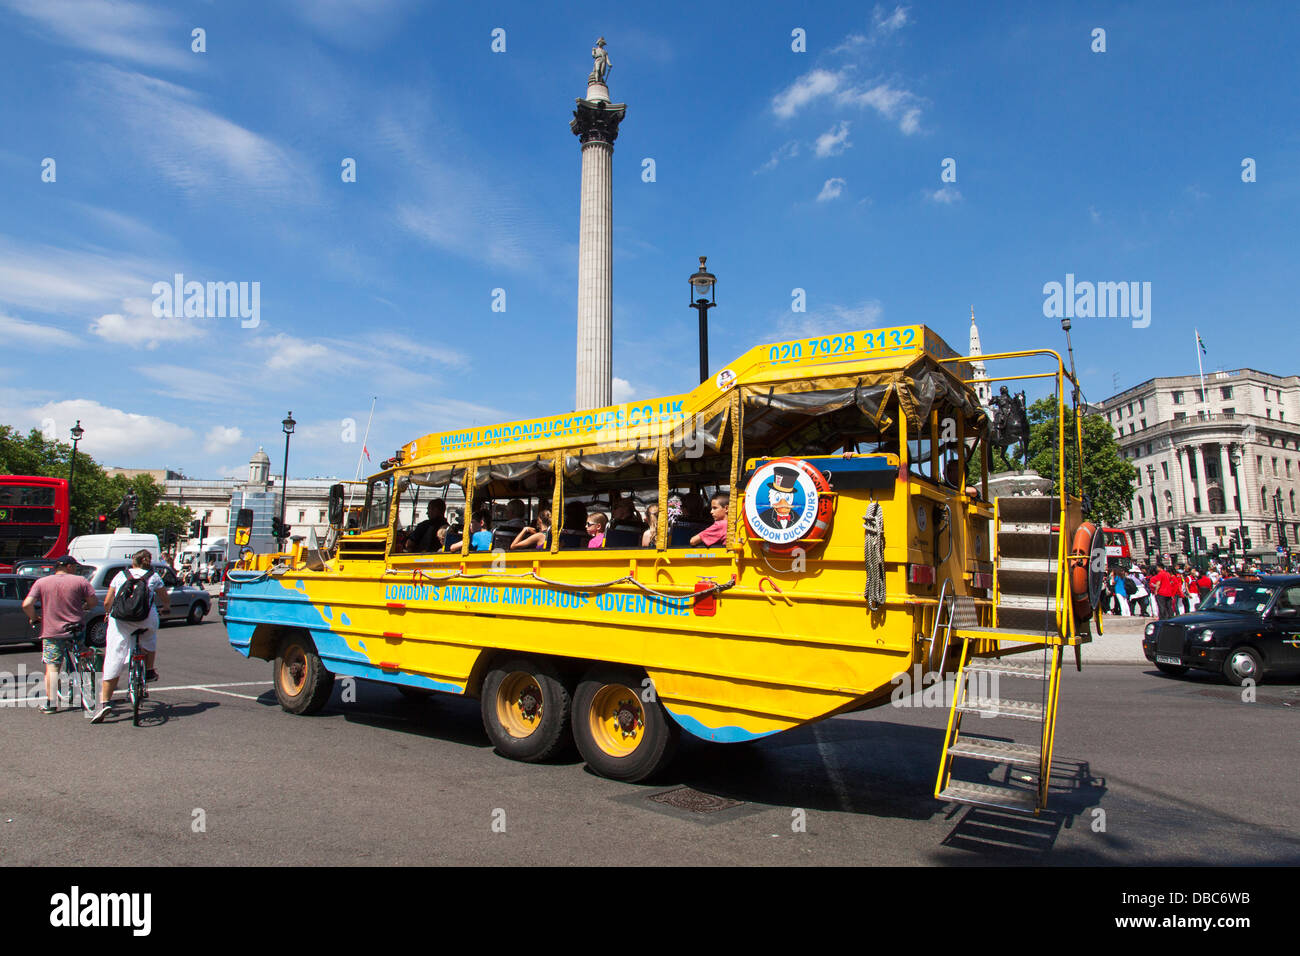 A London Duck Tours amphibious vehicle in Trafalgar Square, London, U.K. Stock Photo